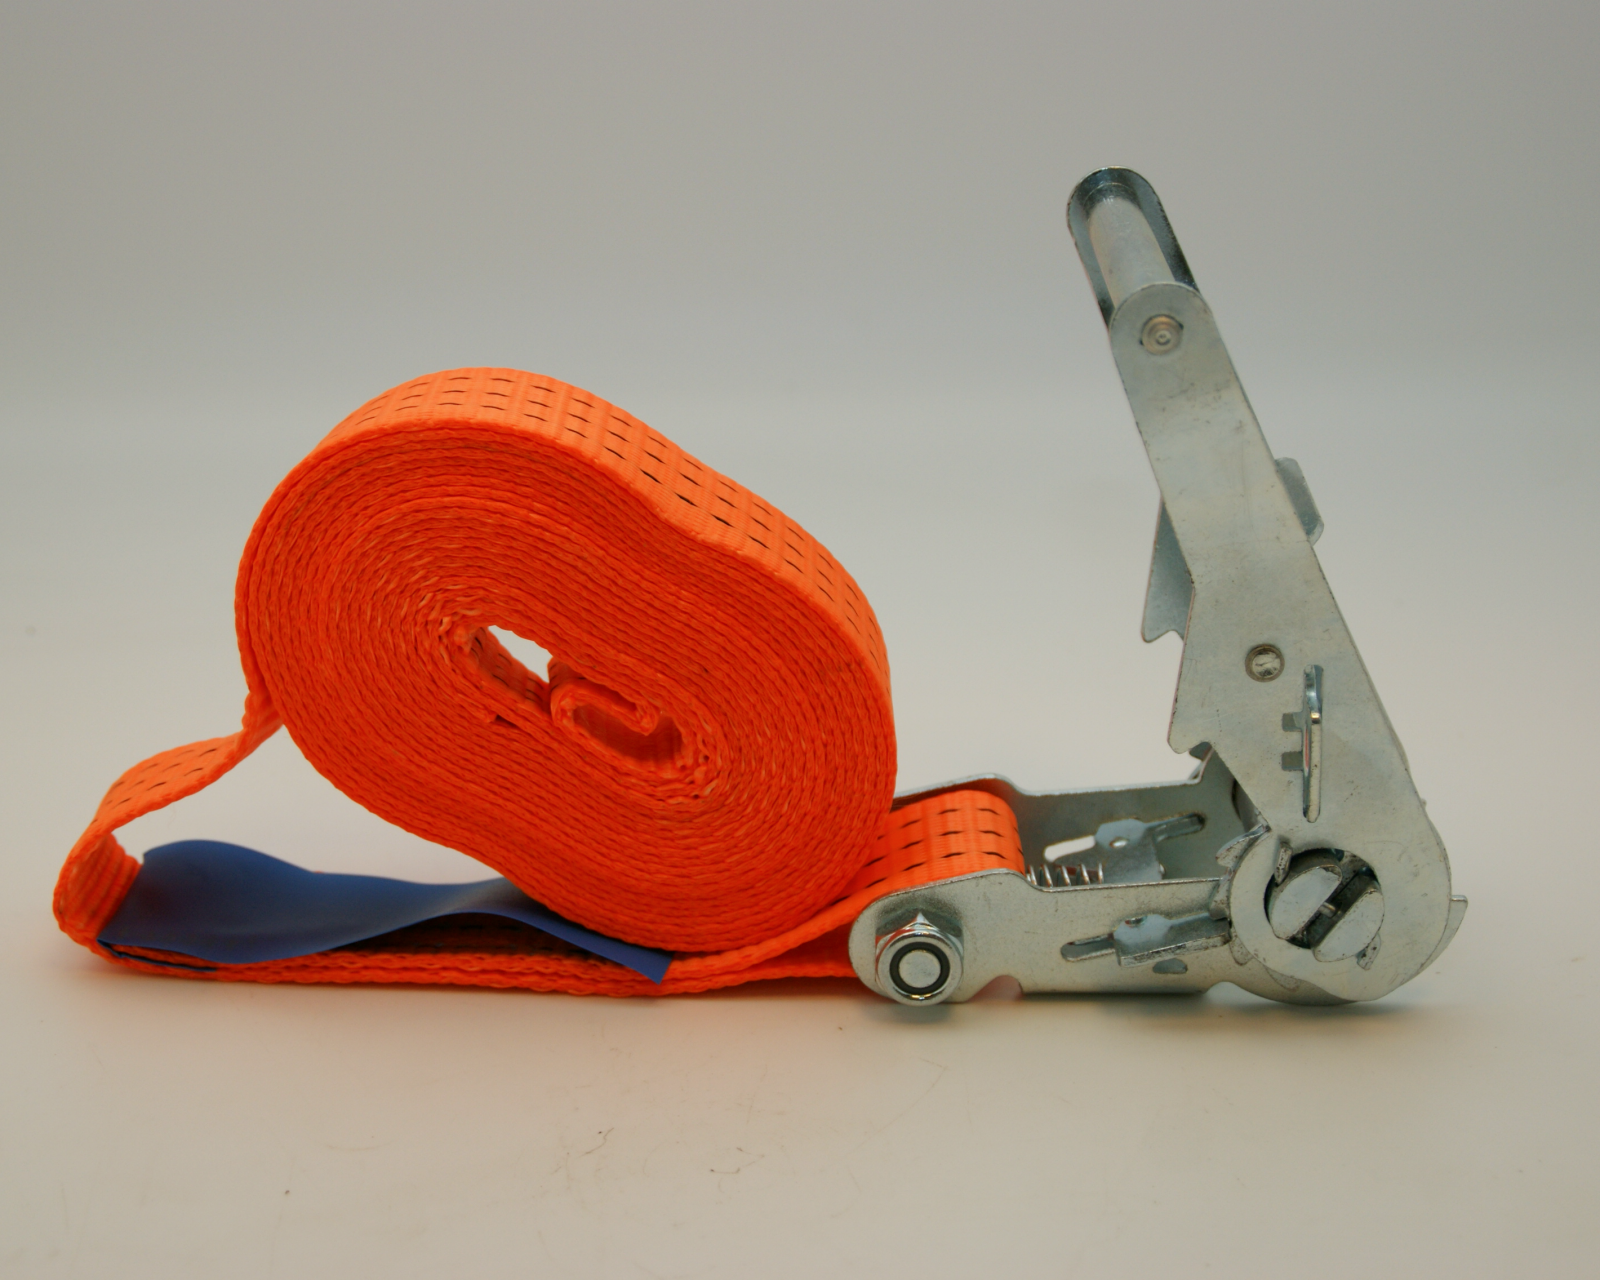 Sjorband: Spanband eindloos oranje, 35mm 2500daN 7m